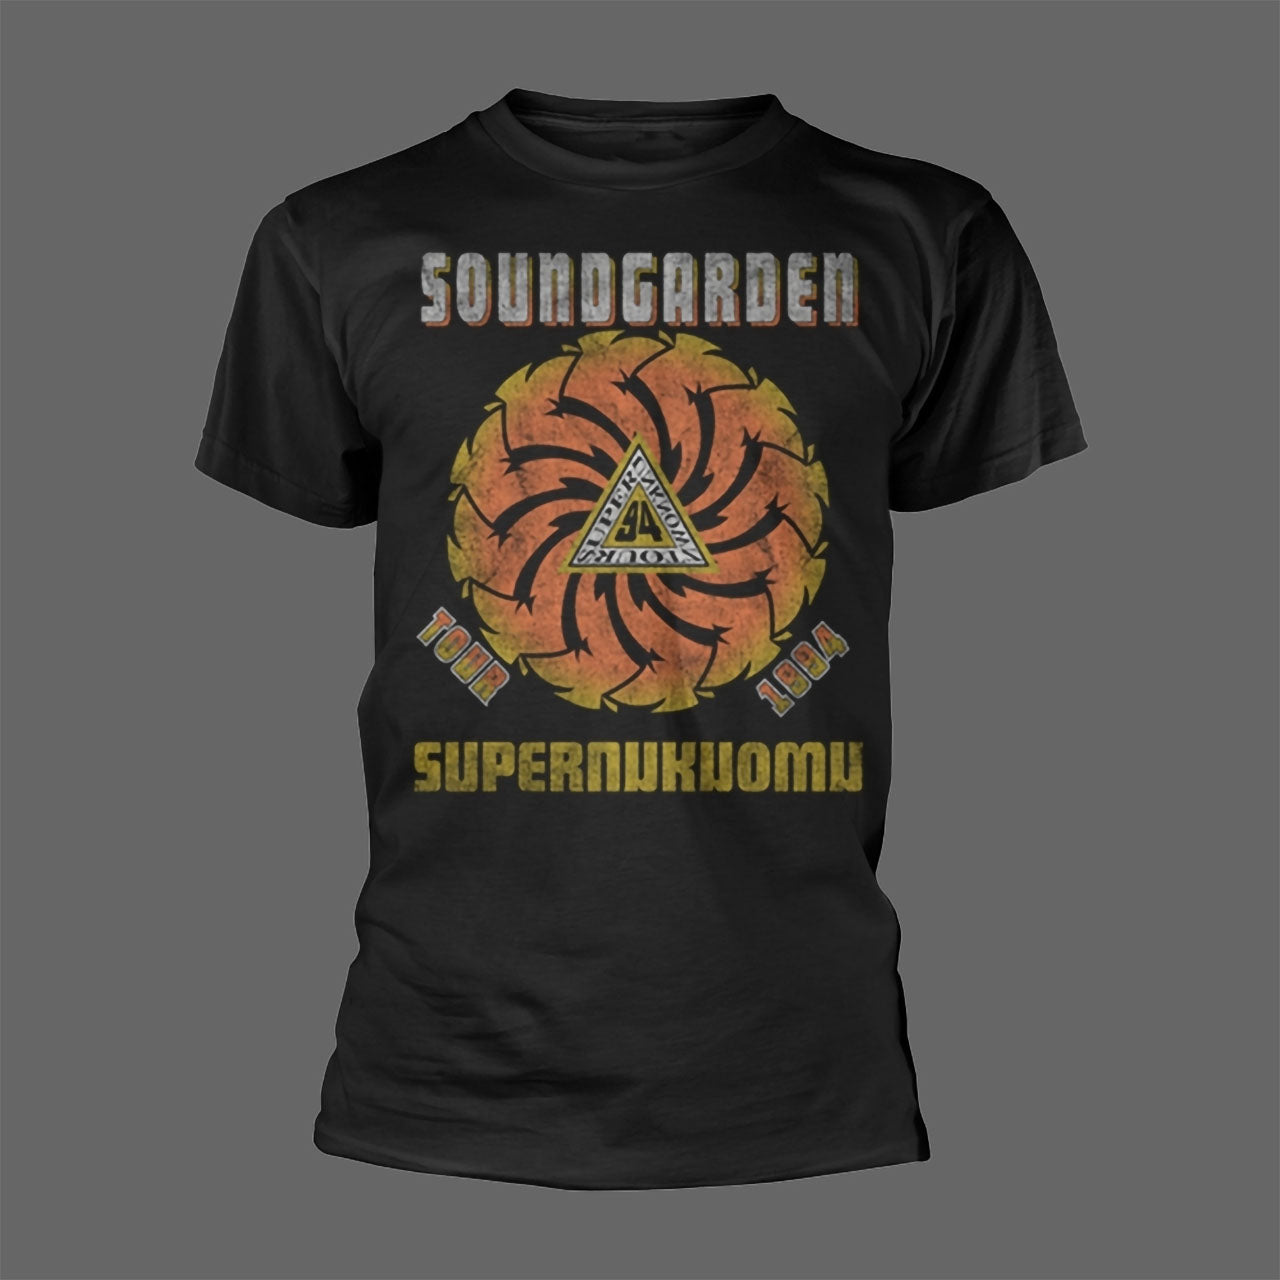 Soundgarden - Superunknown Tour 1994 (T-Shirt)